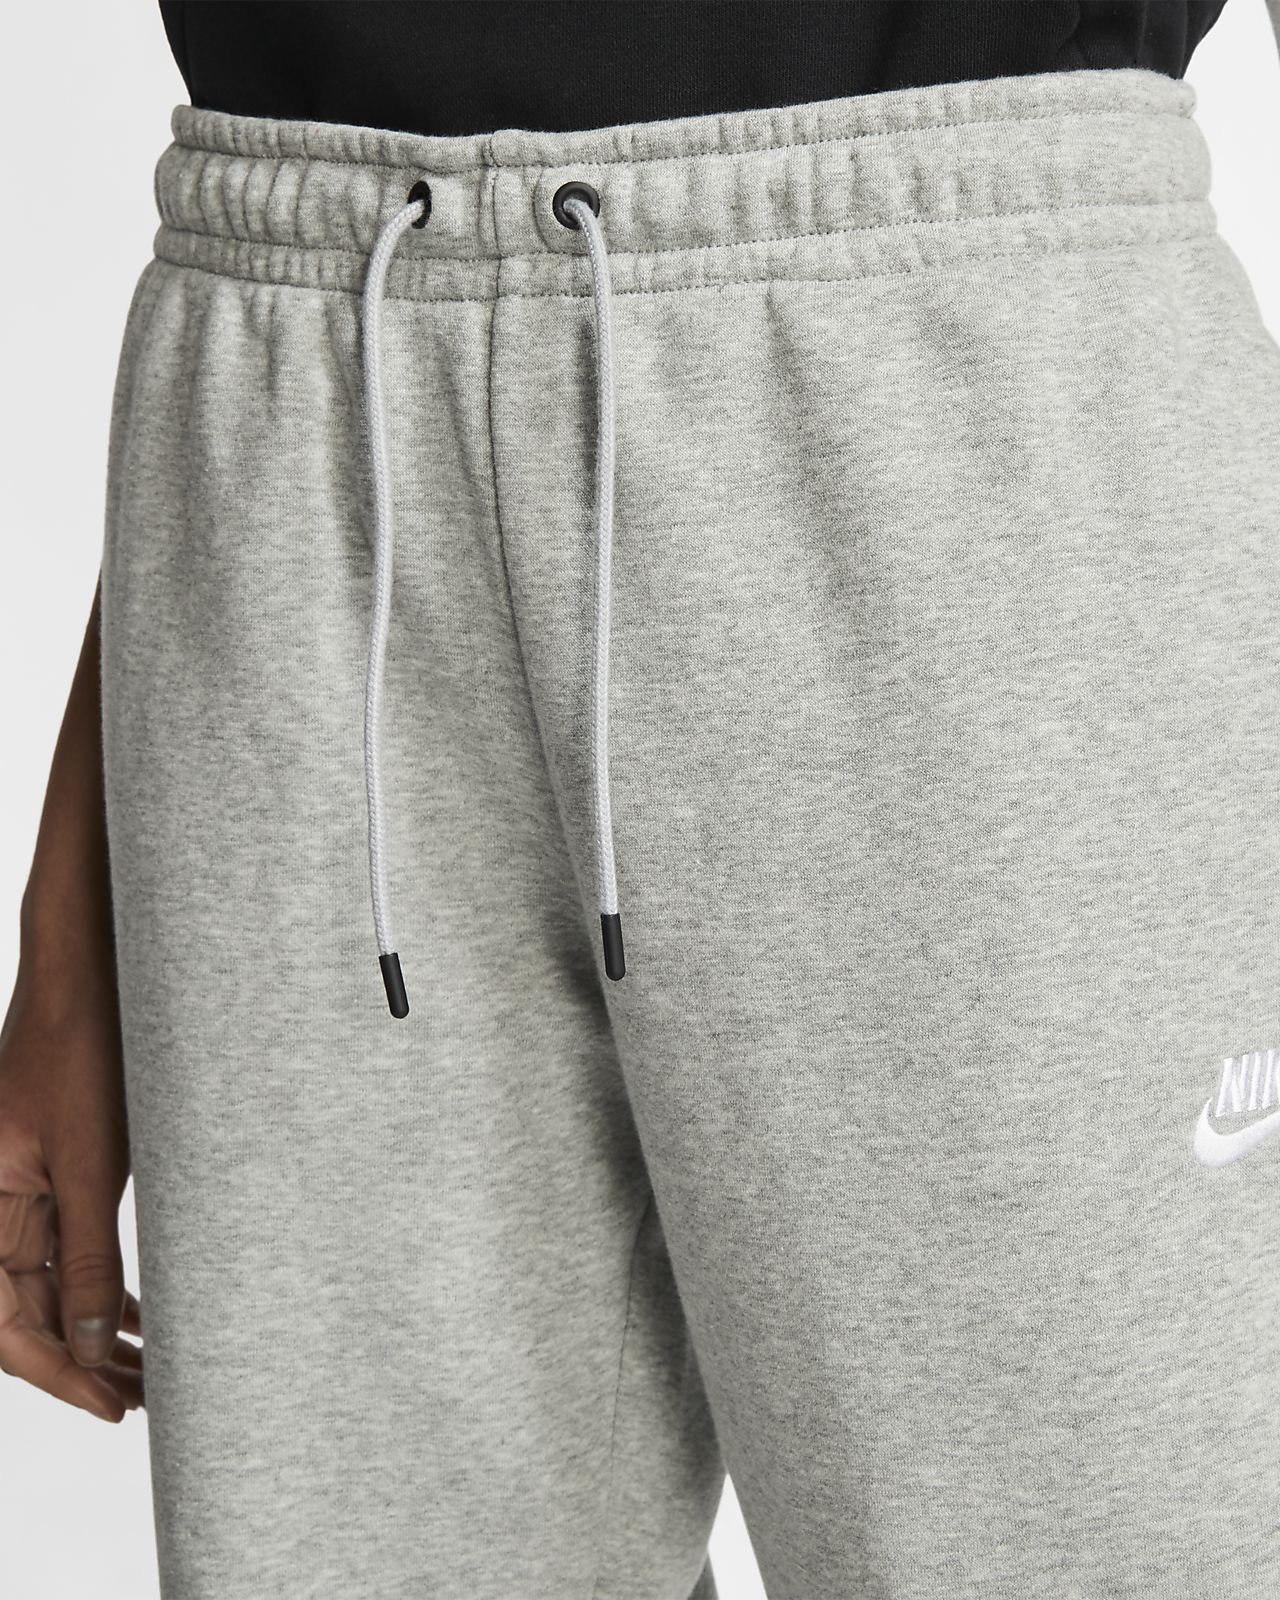 Nike Women S Sweatpants Size Chart